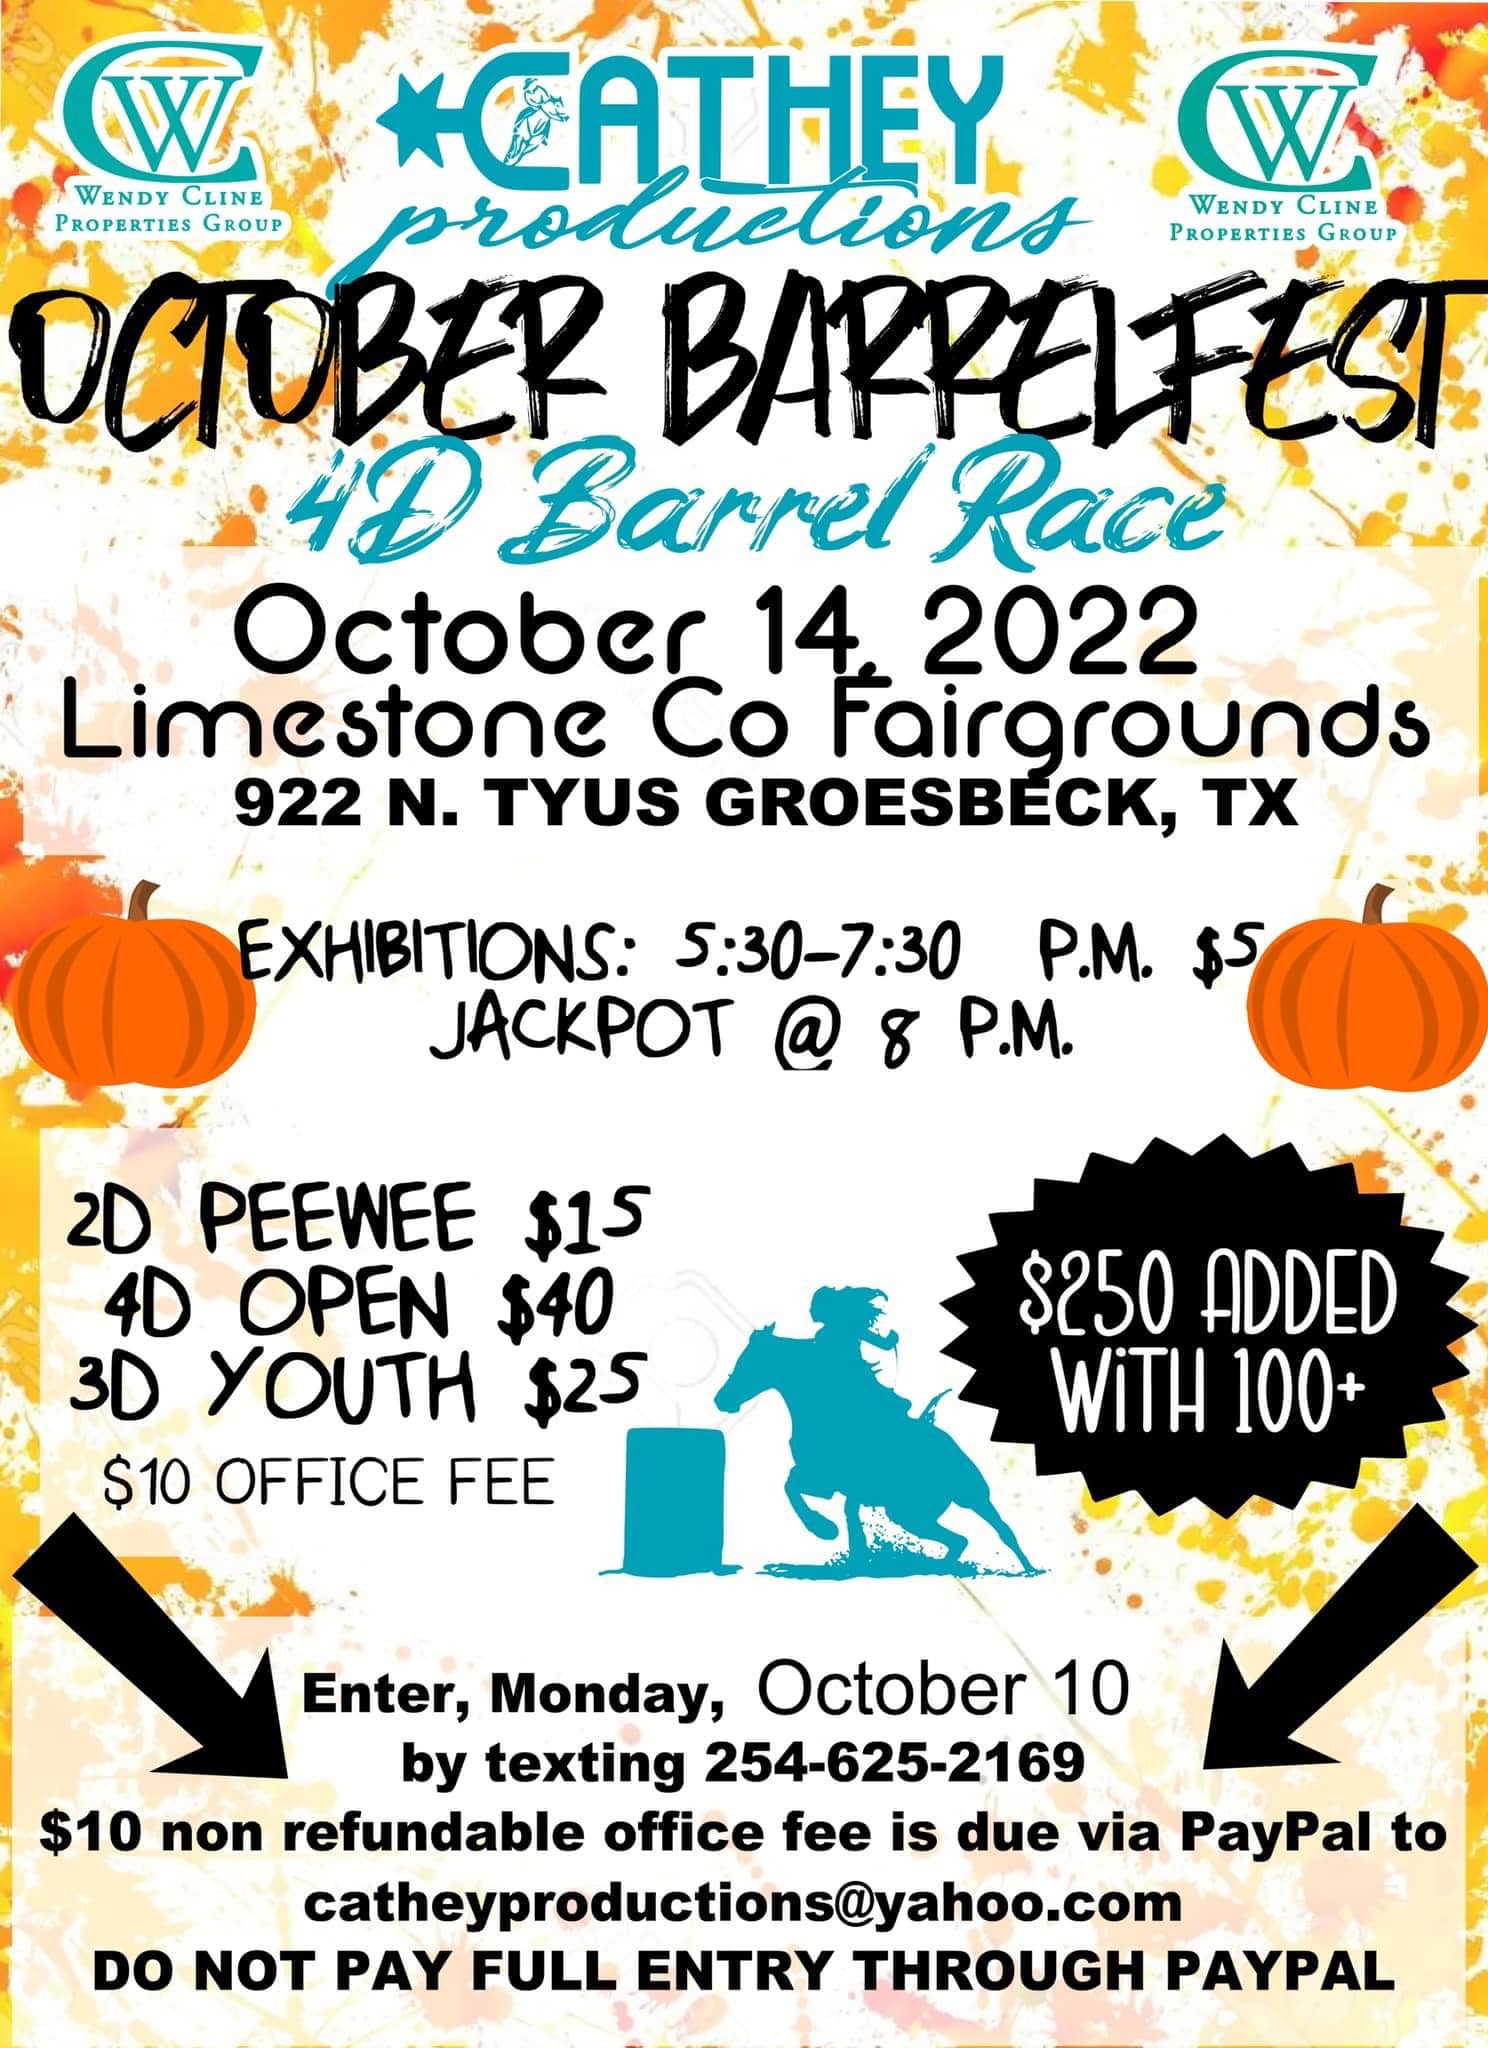 Octoberfest Barrelfest